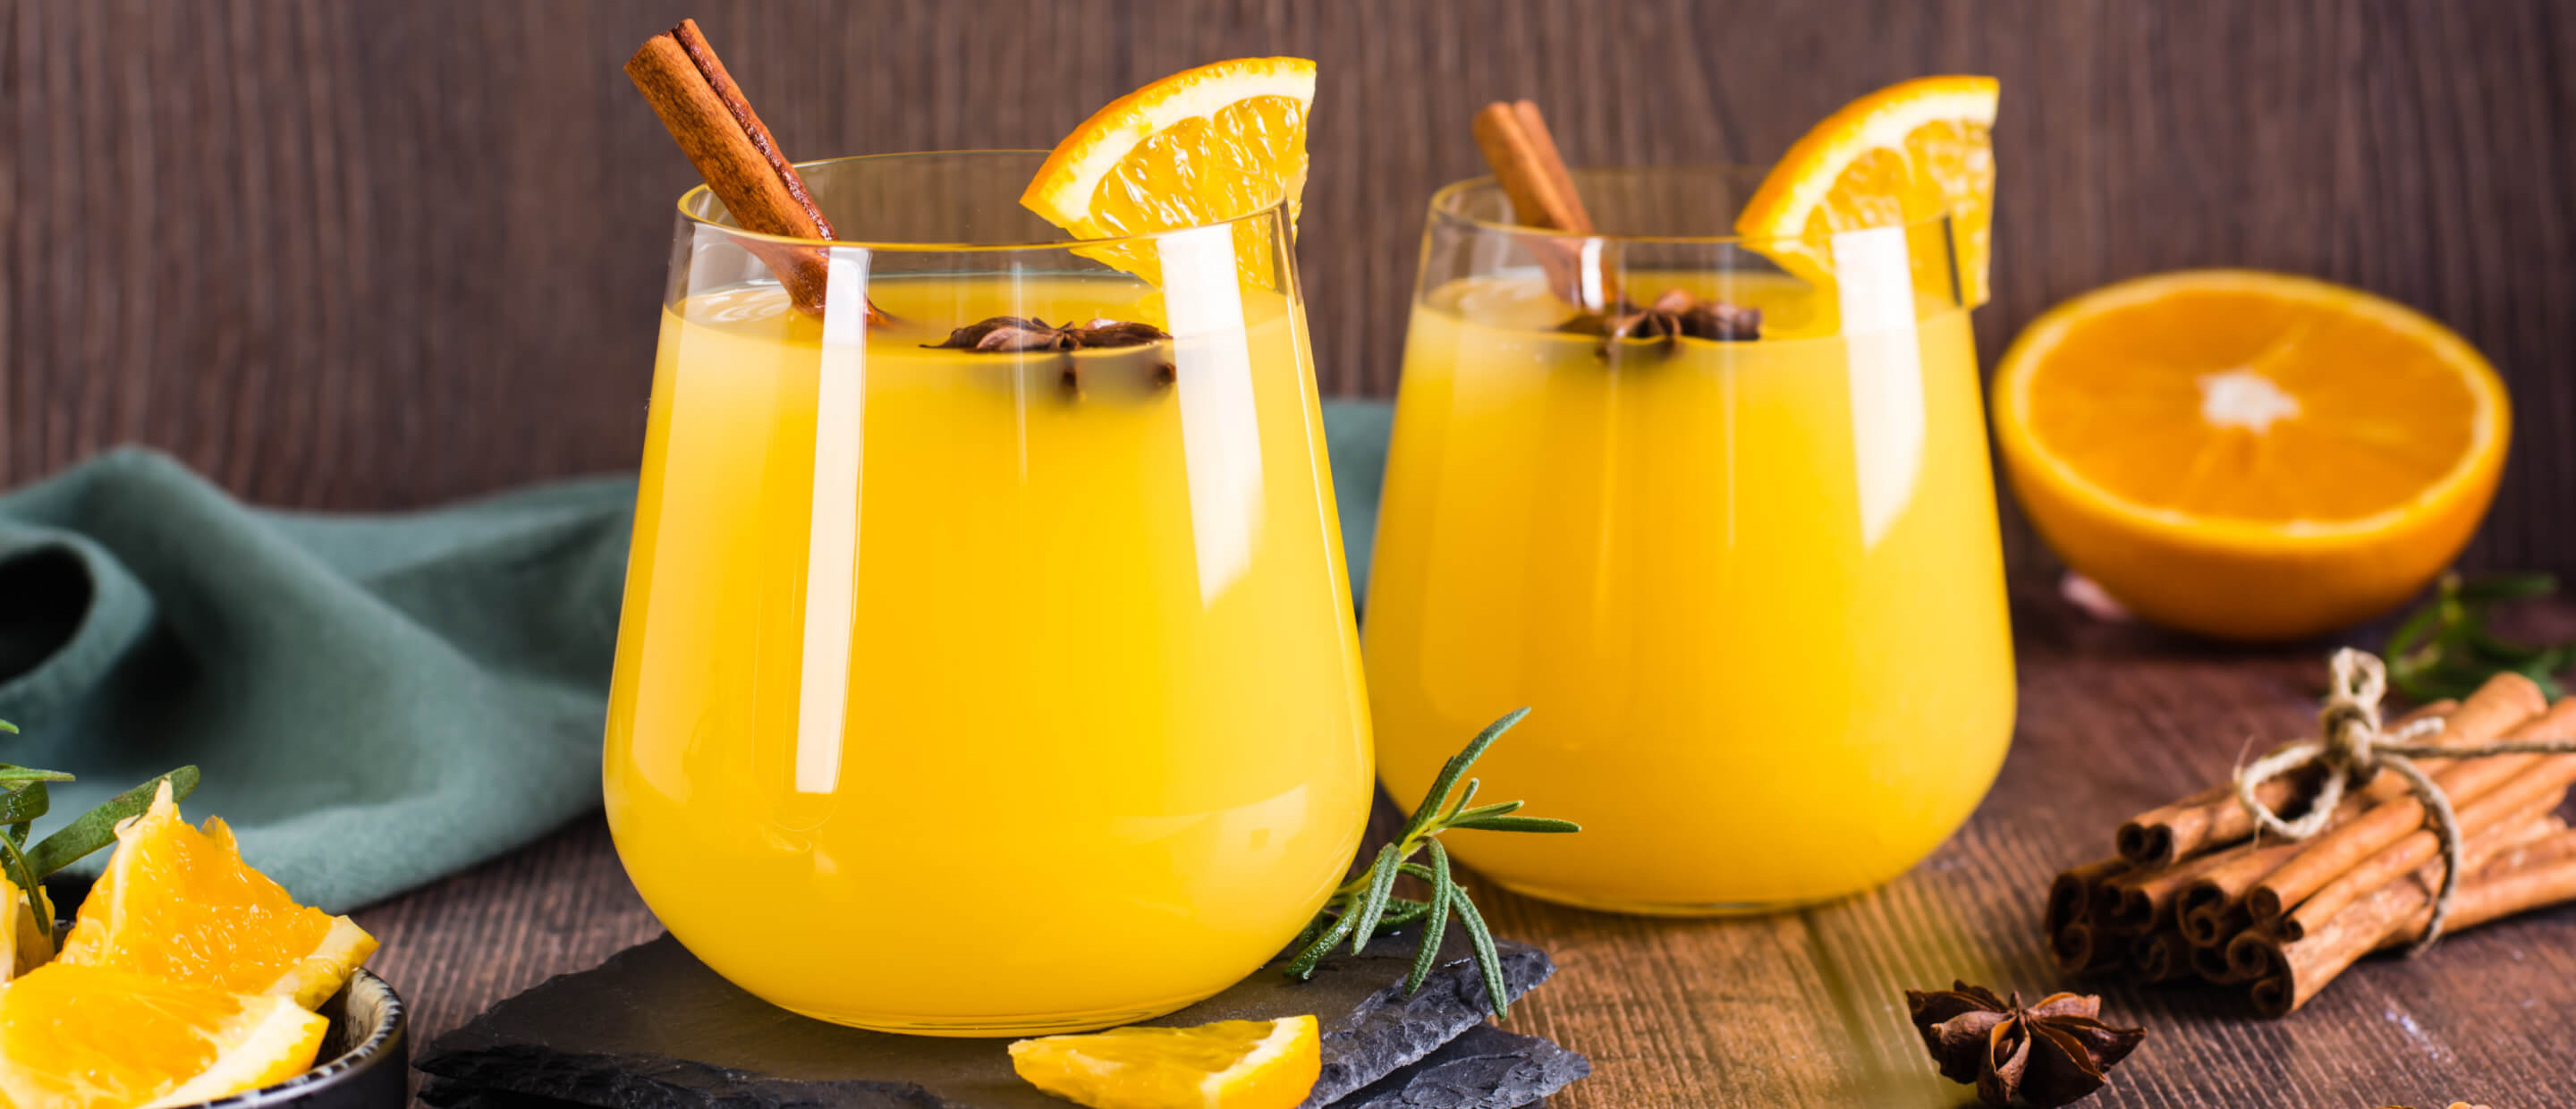 Hot Orange Juice Sipper Recipe with Simply Orange®